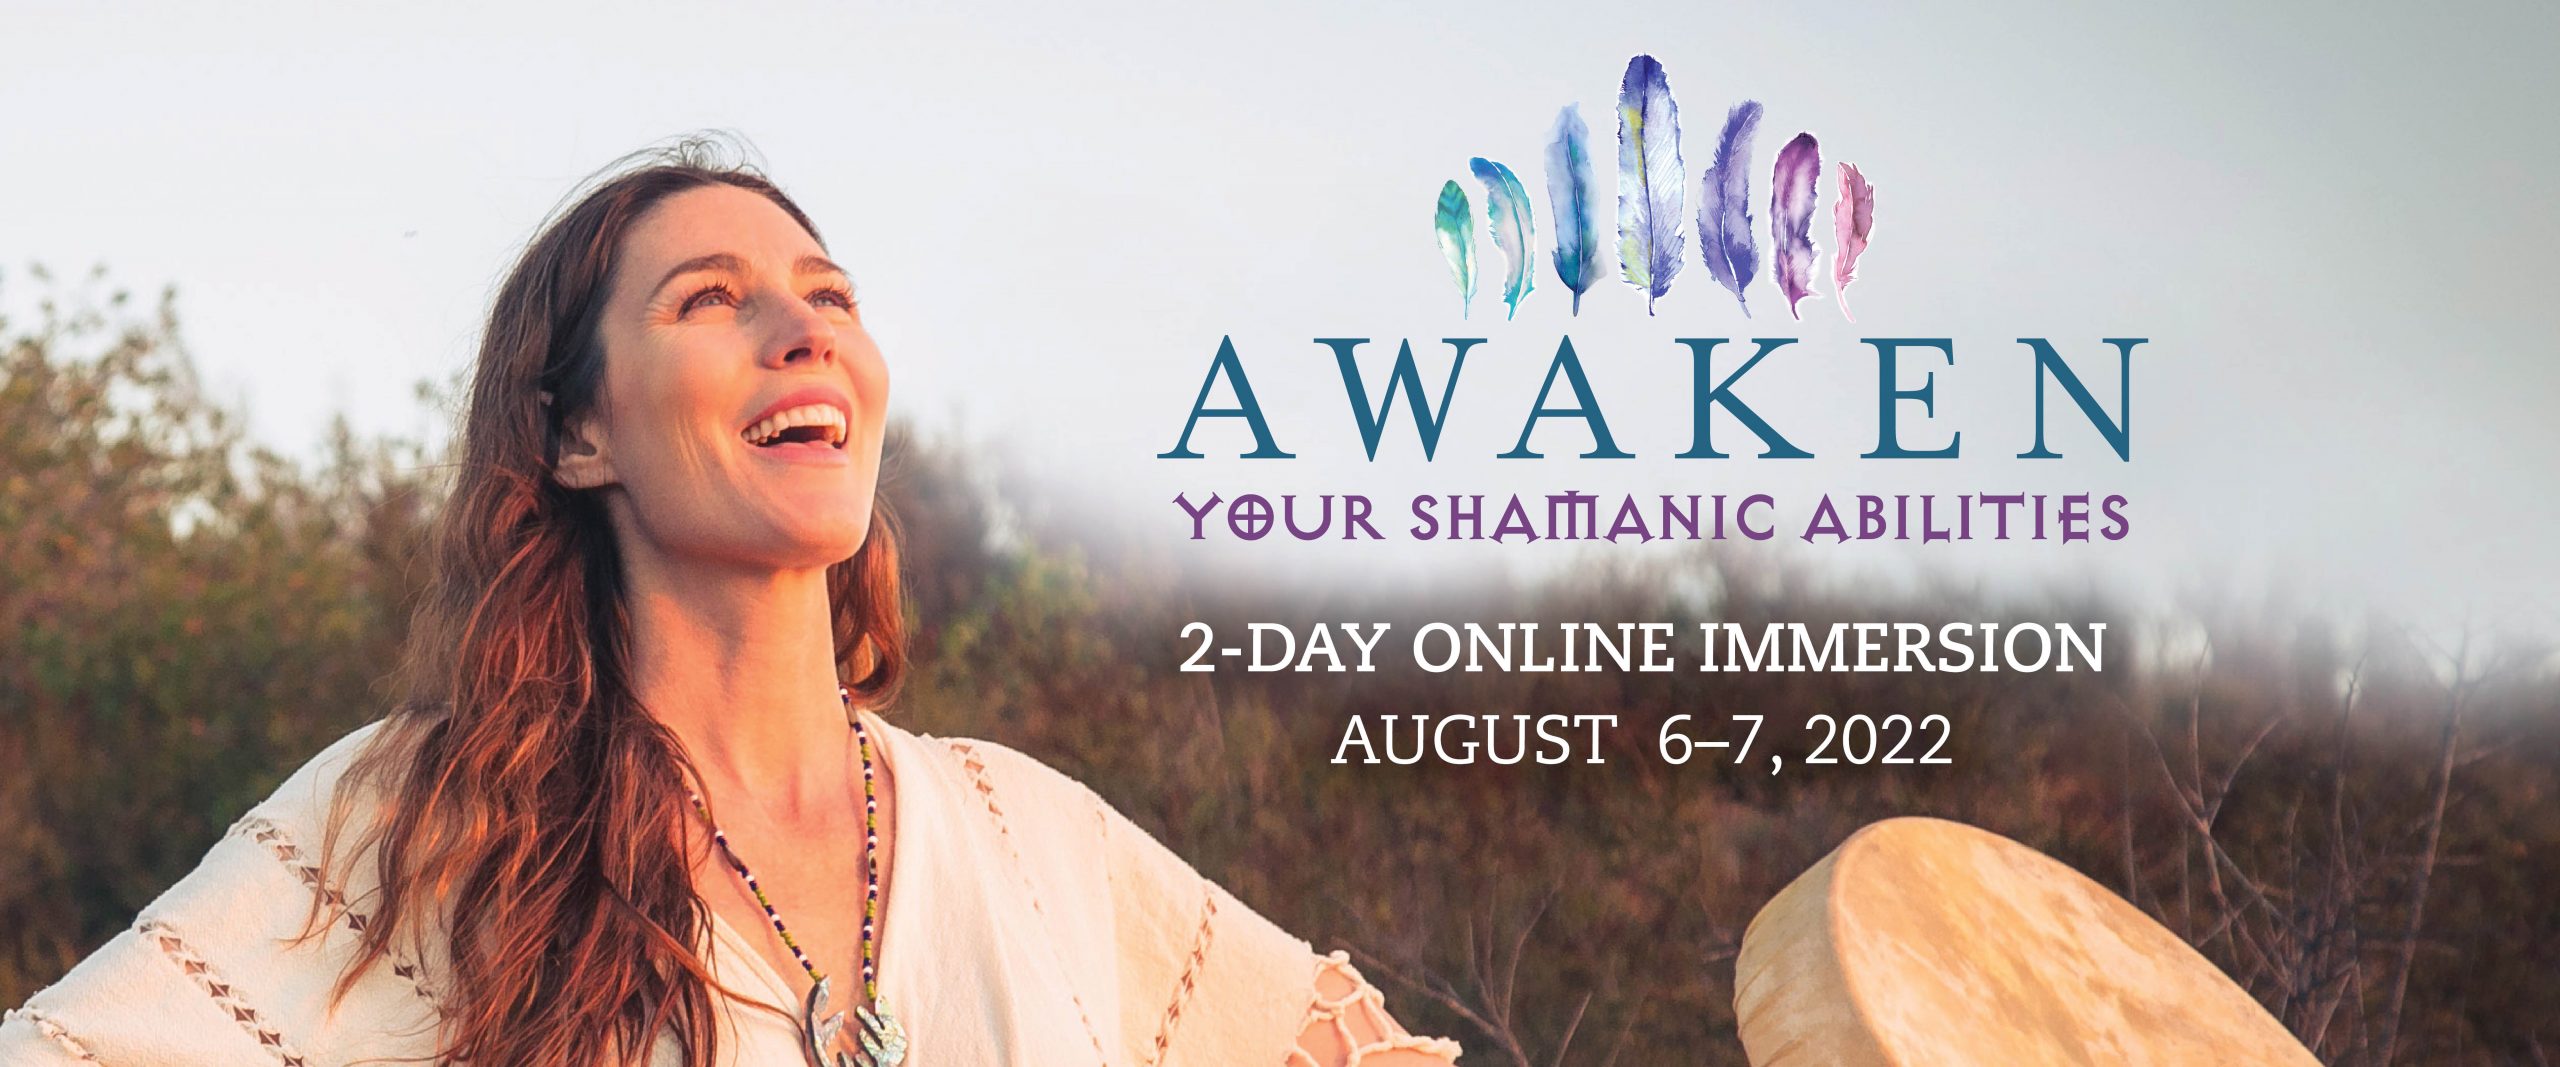 Awaken Your Shamanic Abilities